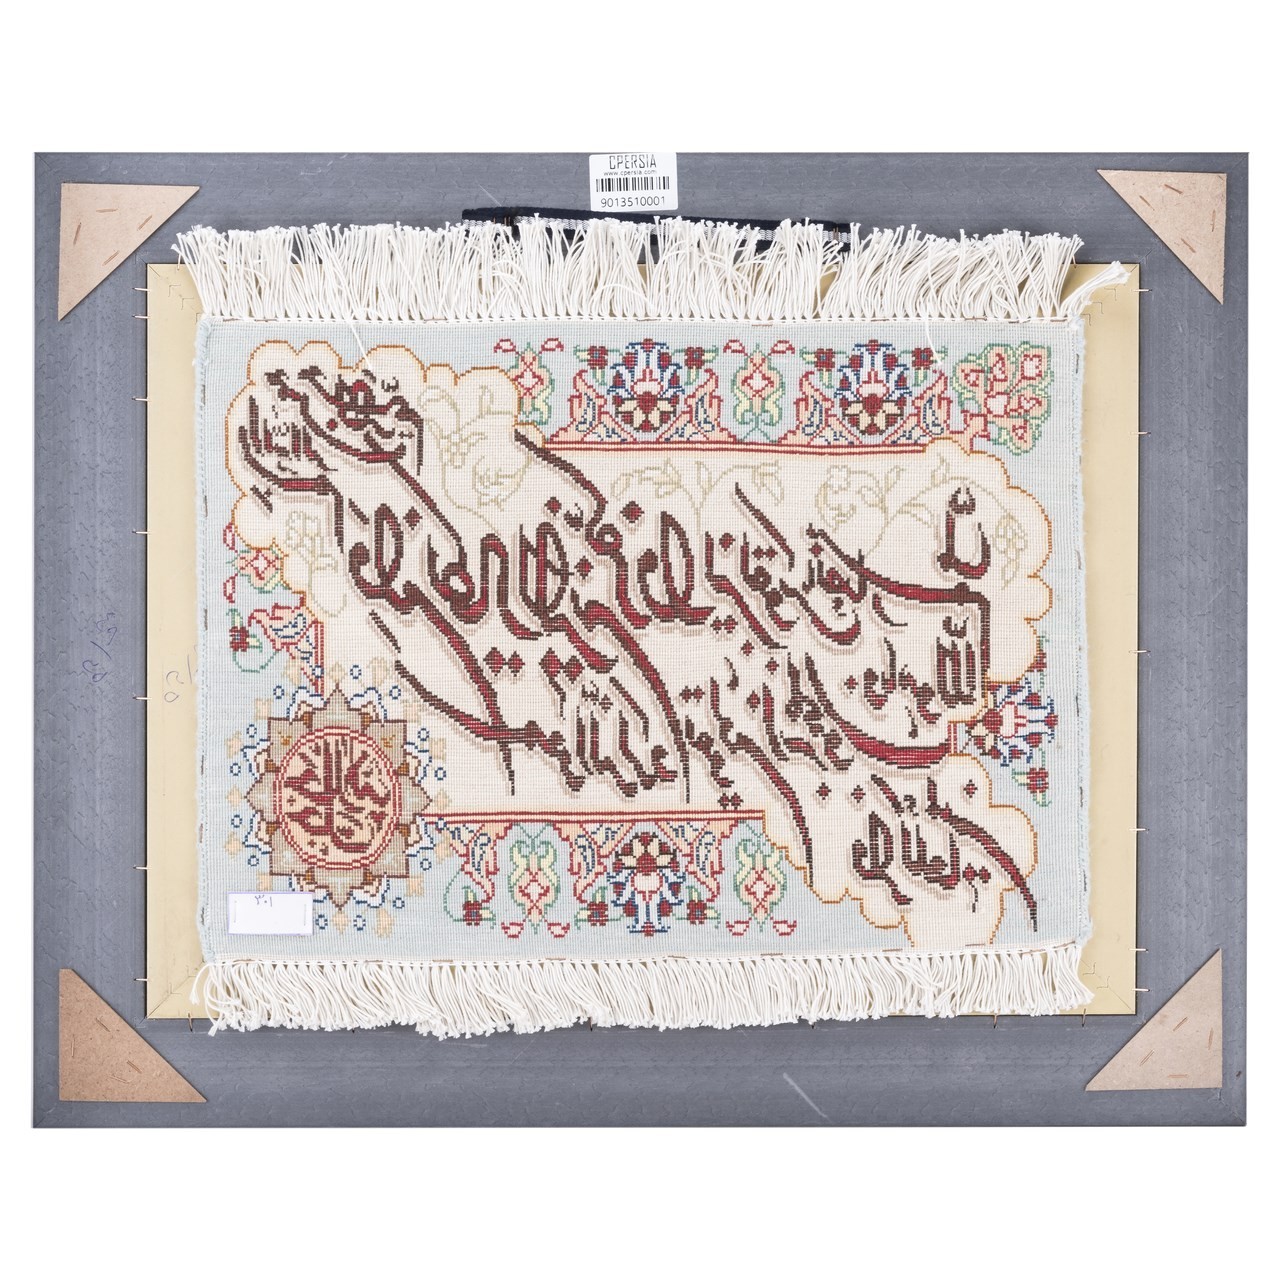 Pictorial Tabriz Carpet Ref: 901351